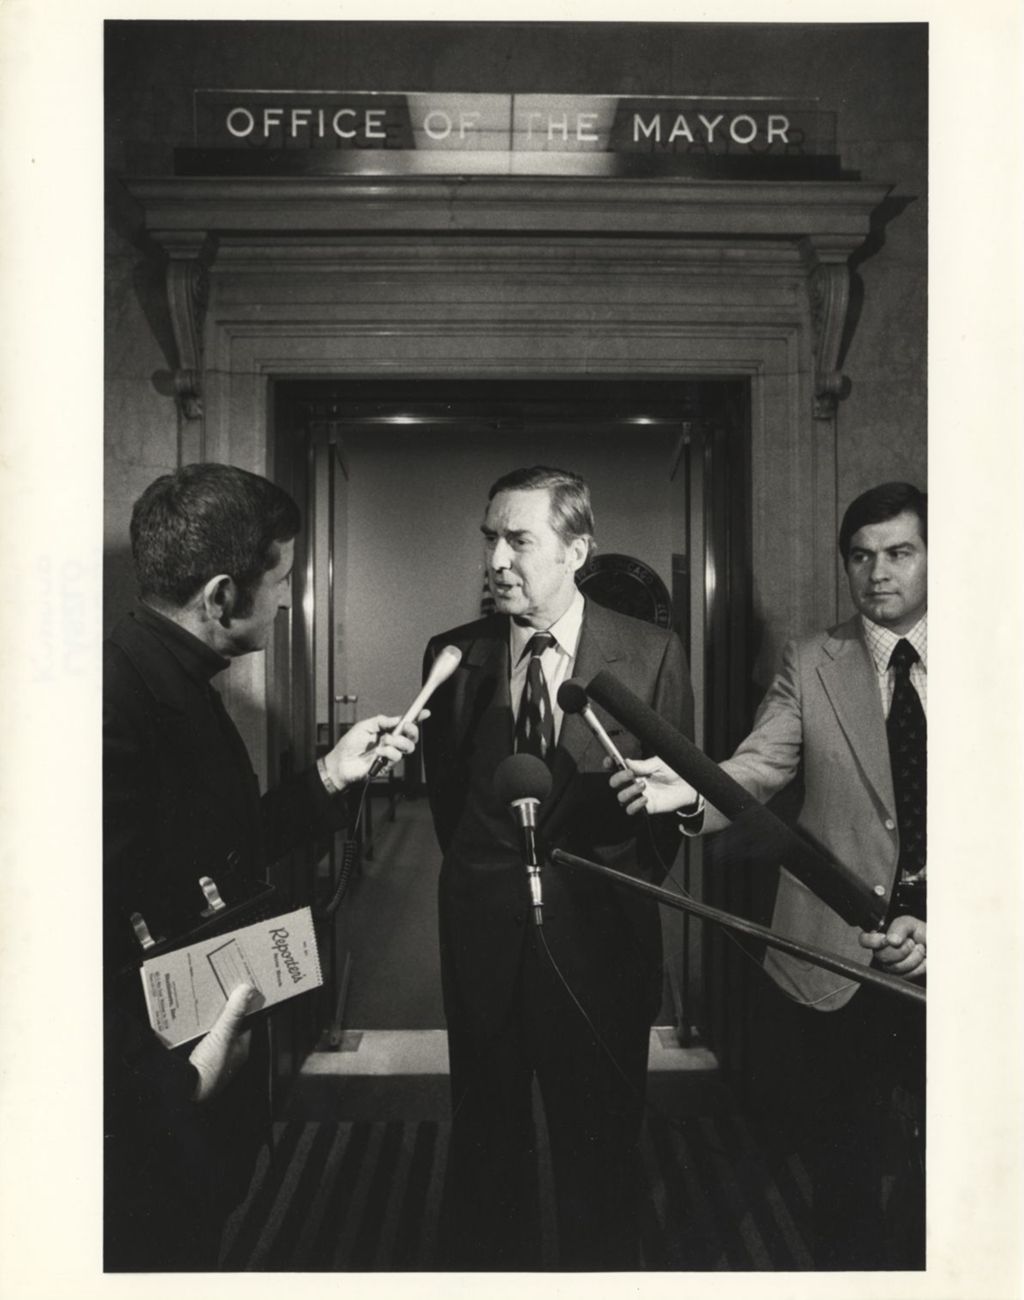 Miniature of Senator Lloyd Bentsen being interviewed